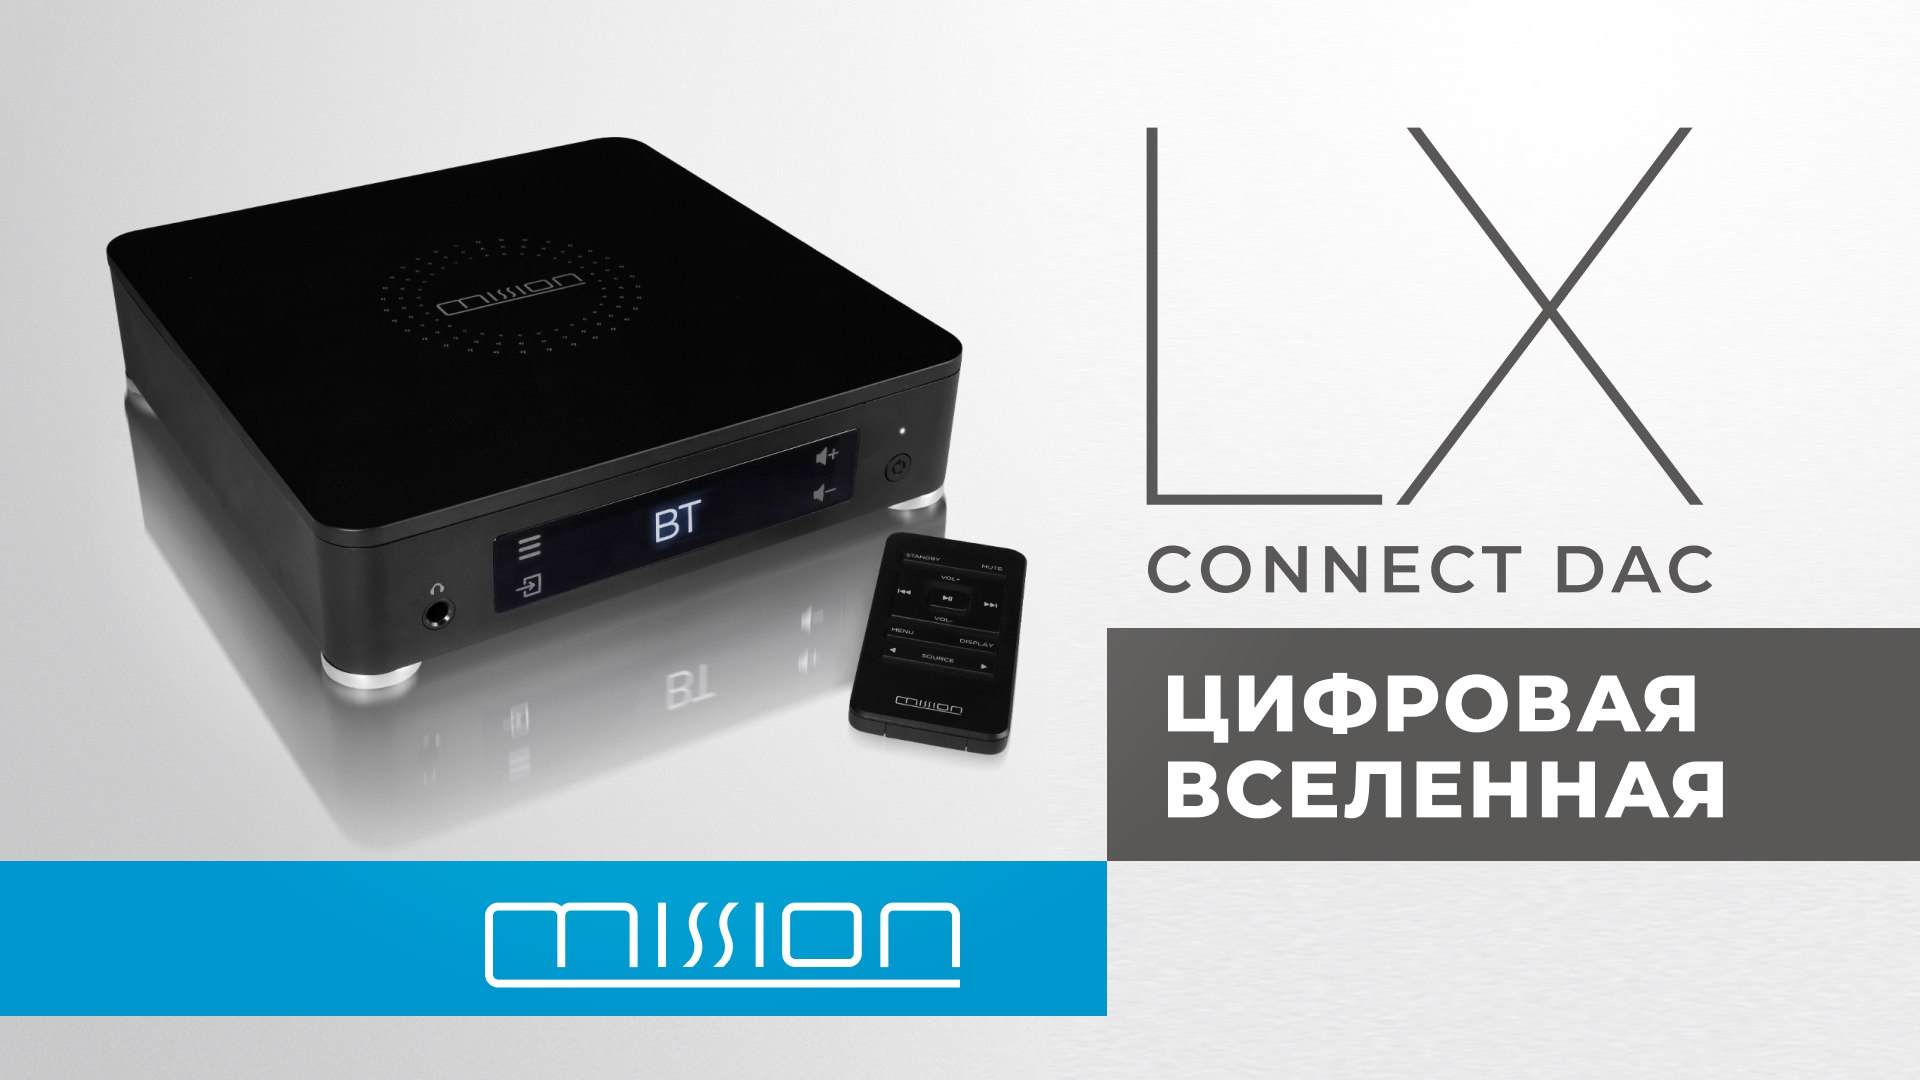 Mission LX Connect DAC | Цифровая вселенная